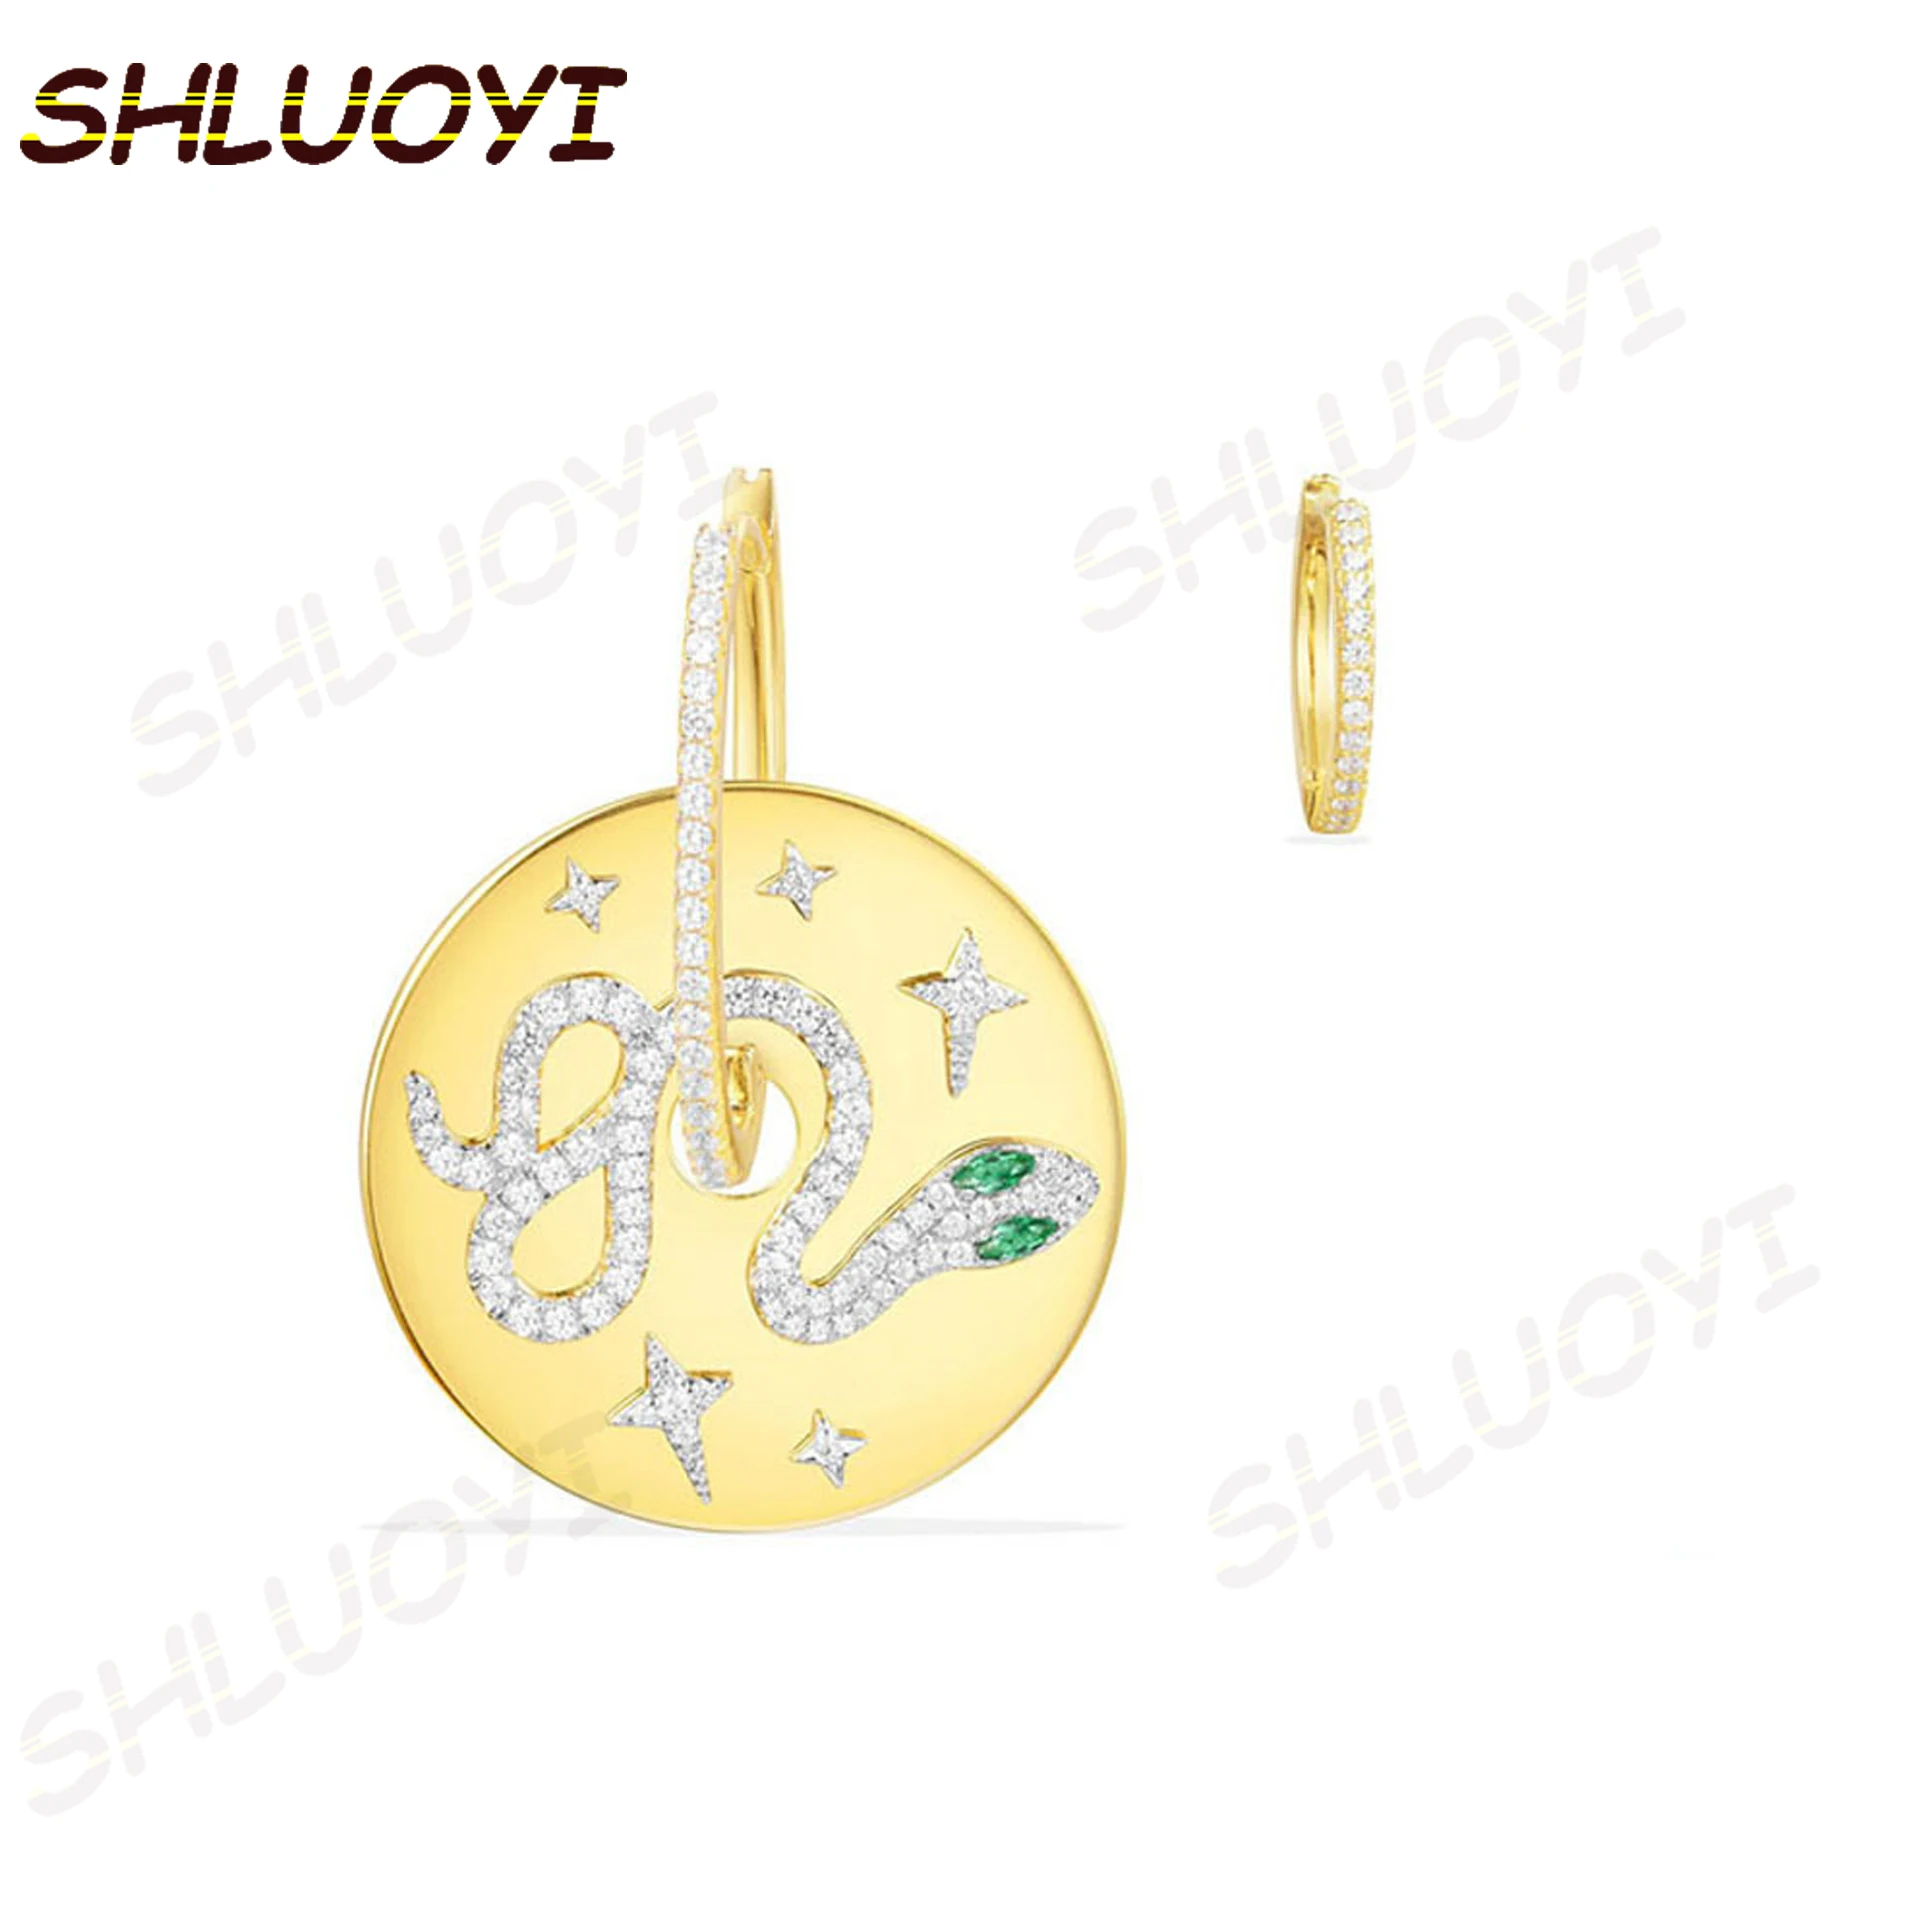 

SHLUOYI Fashion Charm Original 1:1 Copy,Asymmetric Uraeus Earrings With Zirconia Stone Luxury Jewelry Gift For Female